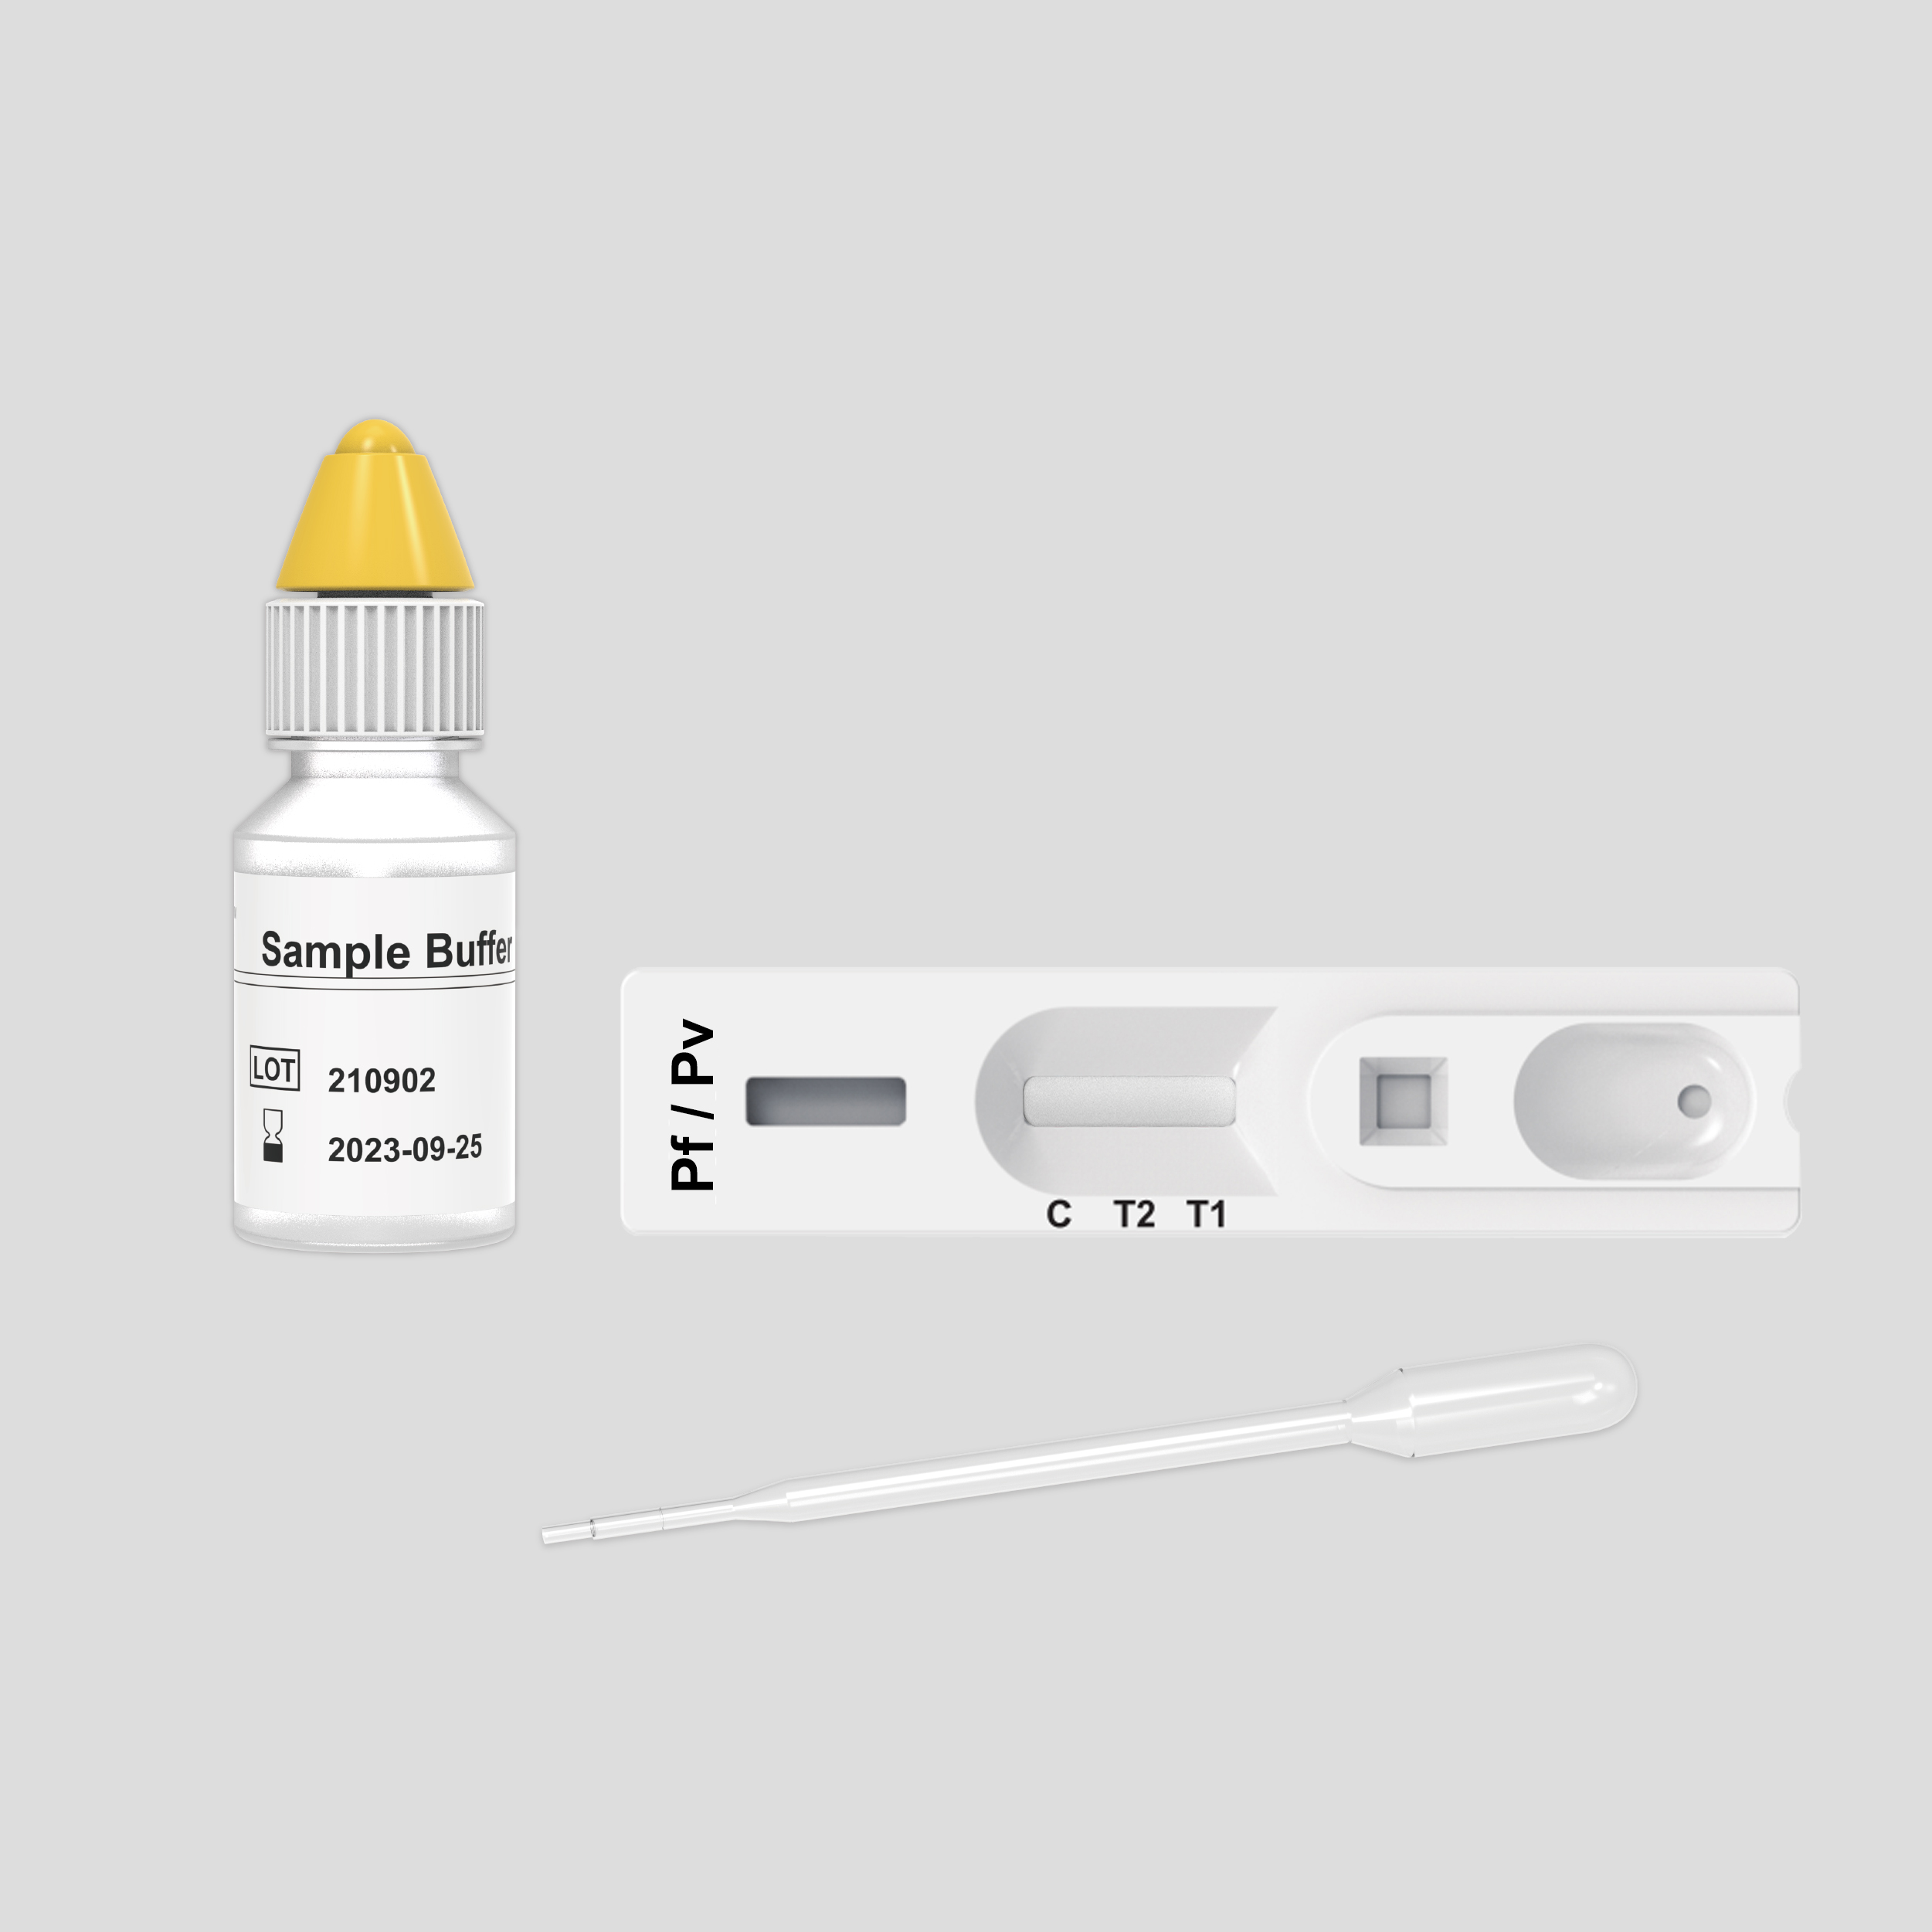 KaiBiLi Malaria Pf/Pv Antigen Rapid Test